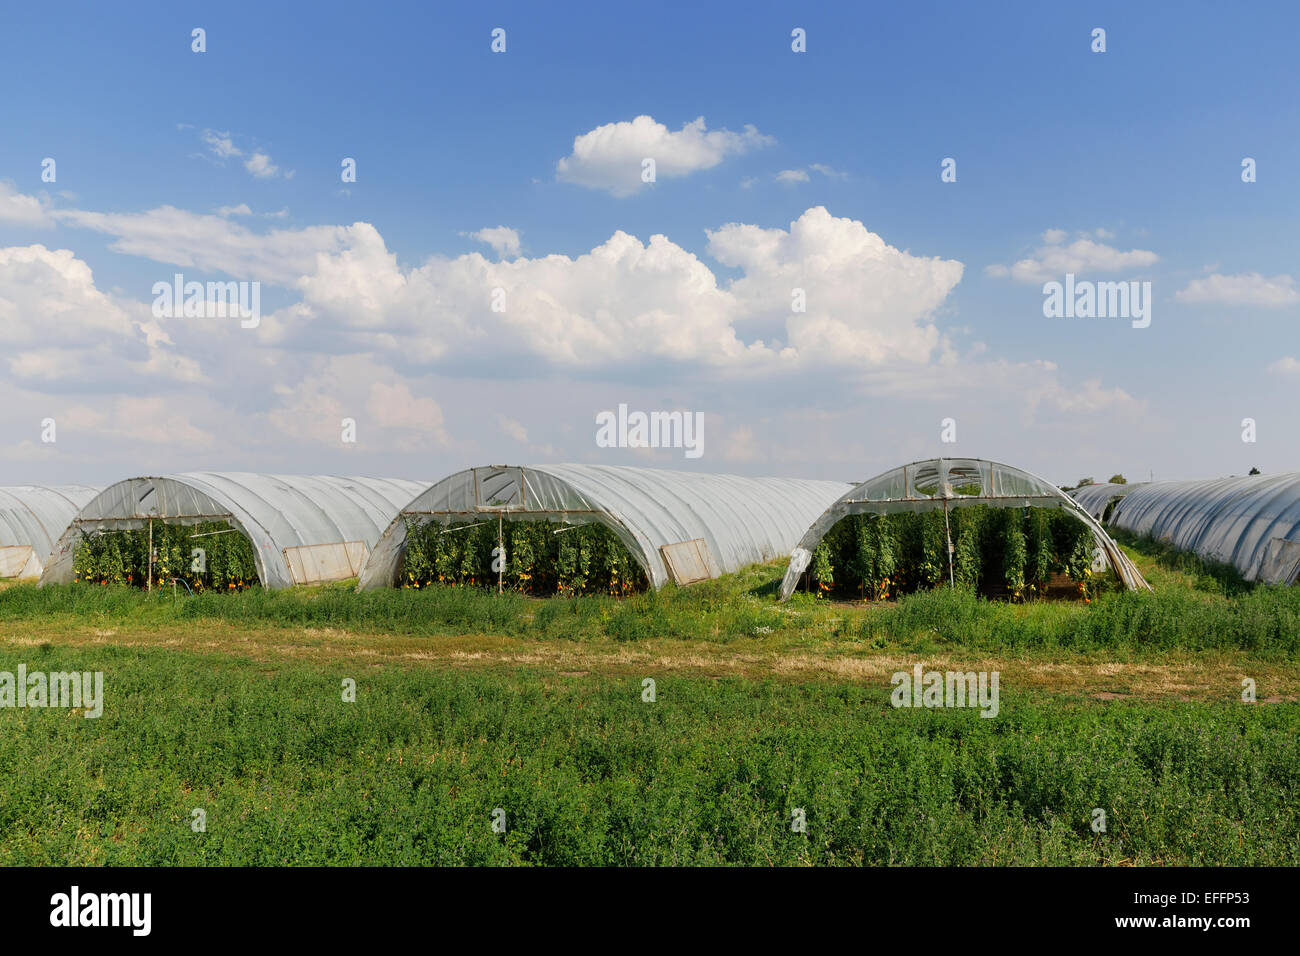 Austria, Burgenland, Sankt Andrae am Zicksee, invernaderos, el cultivo de plantas de tomate Foto de stock